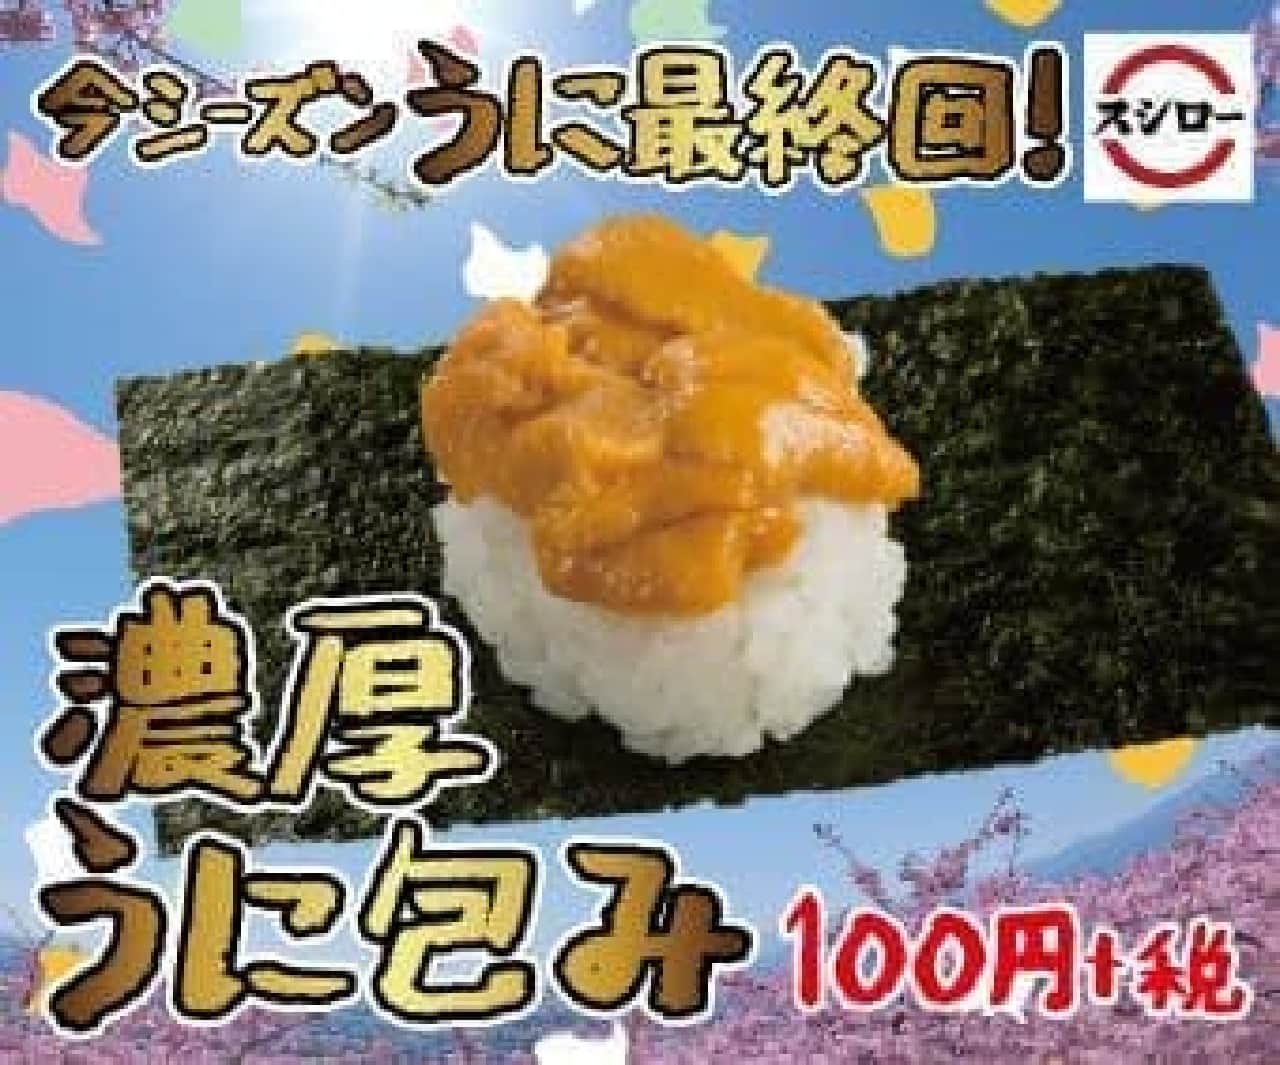 Sushiro "Wrapped in rich sea urchin"